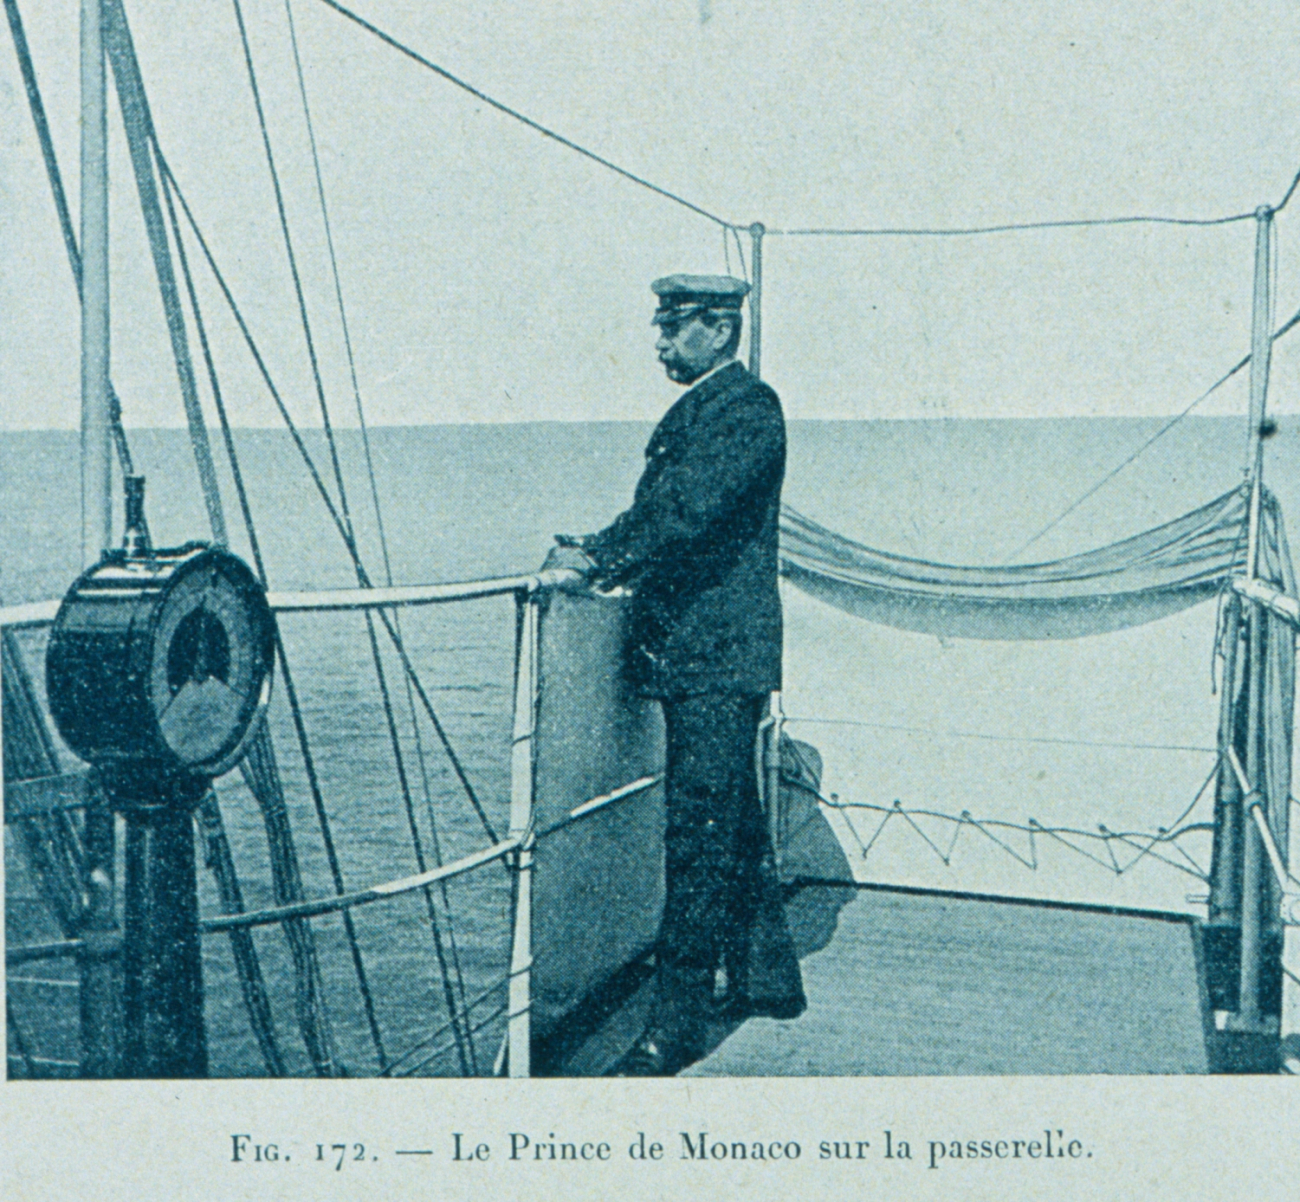 Prince Albert I of Monaco on the bridge wing of PRINCESS ALICE II in1898